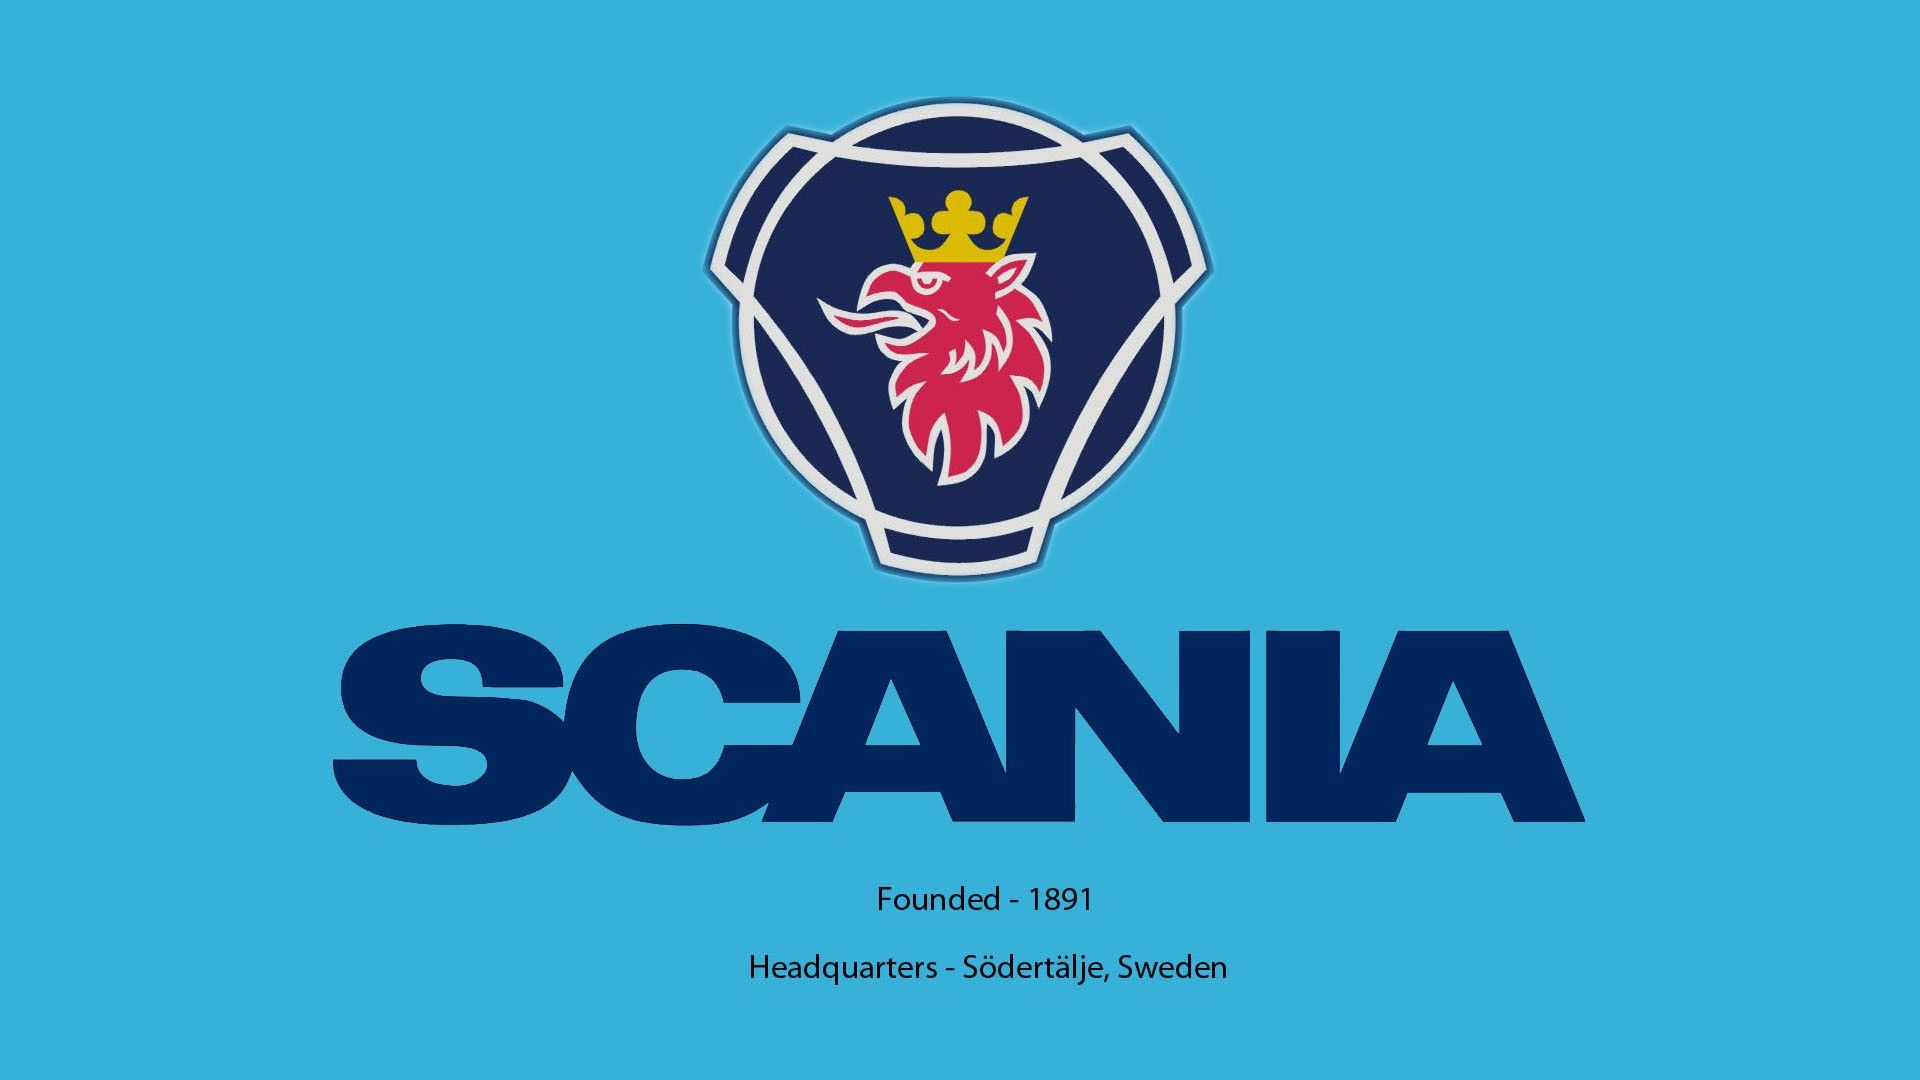 Scania logo wallpaper HD